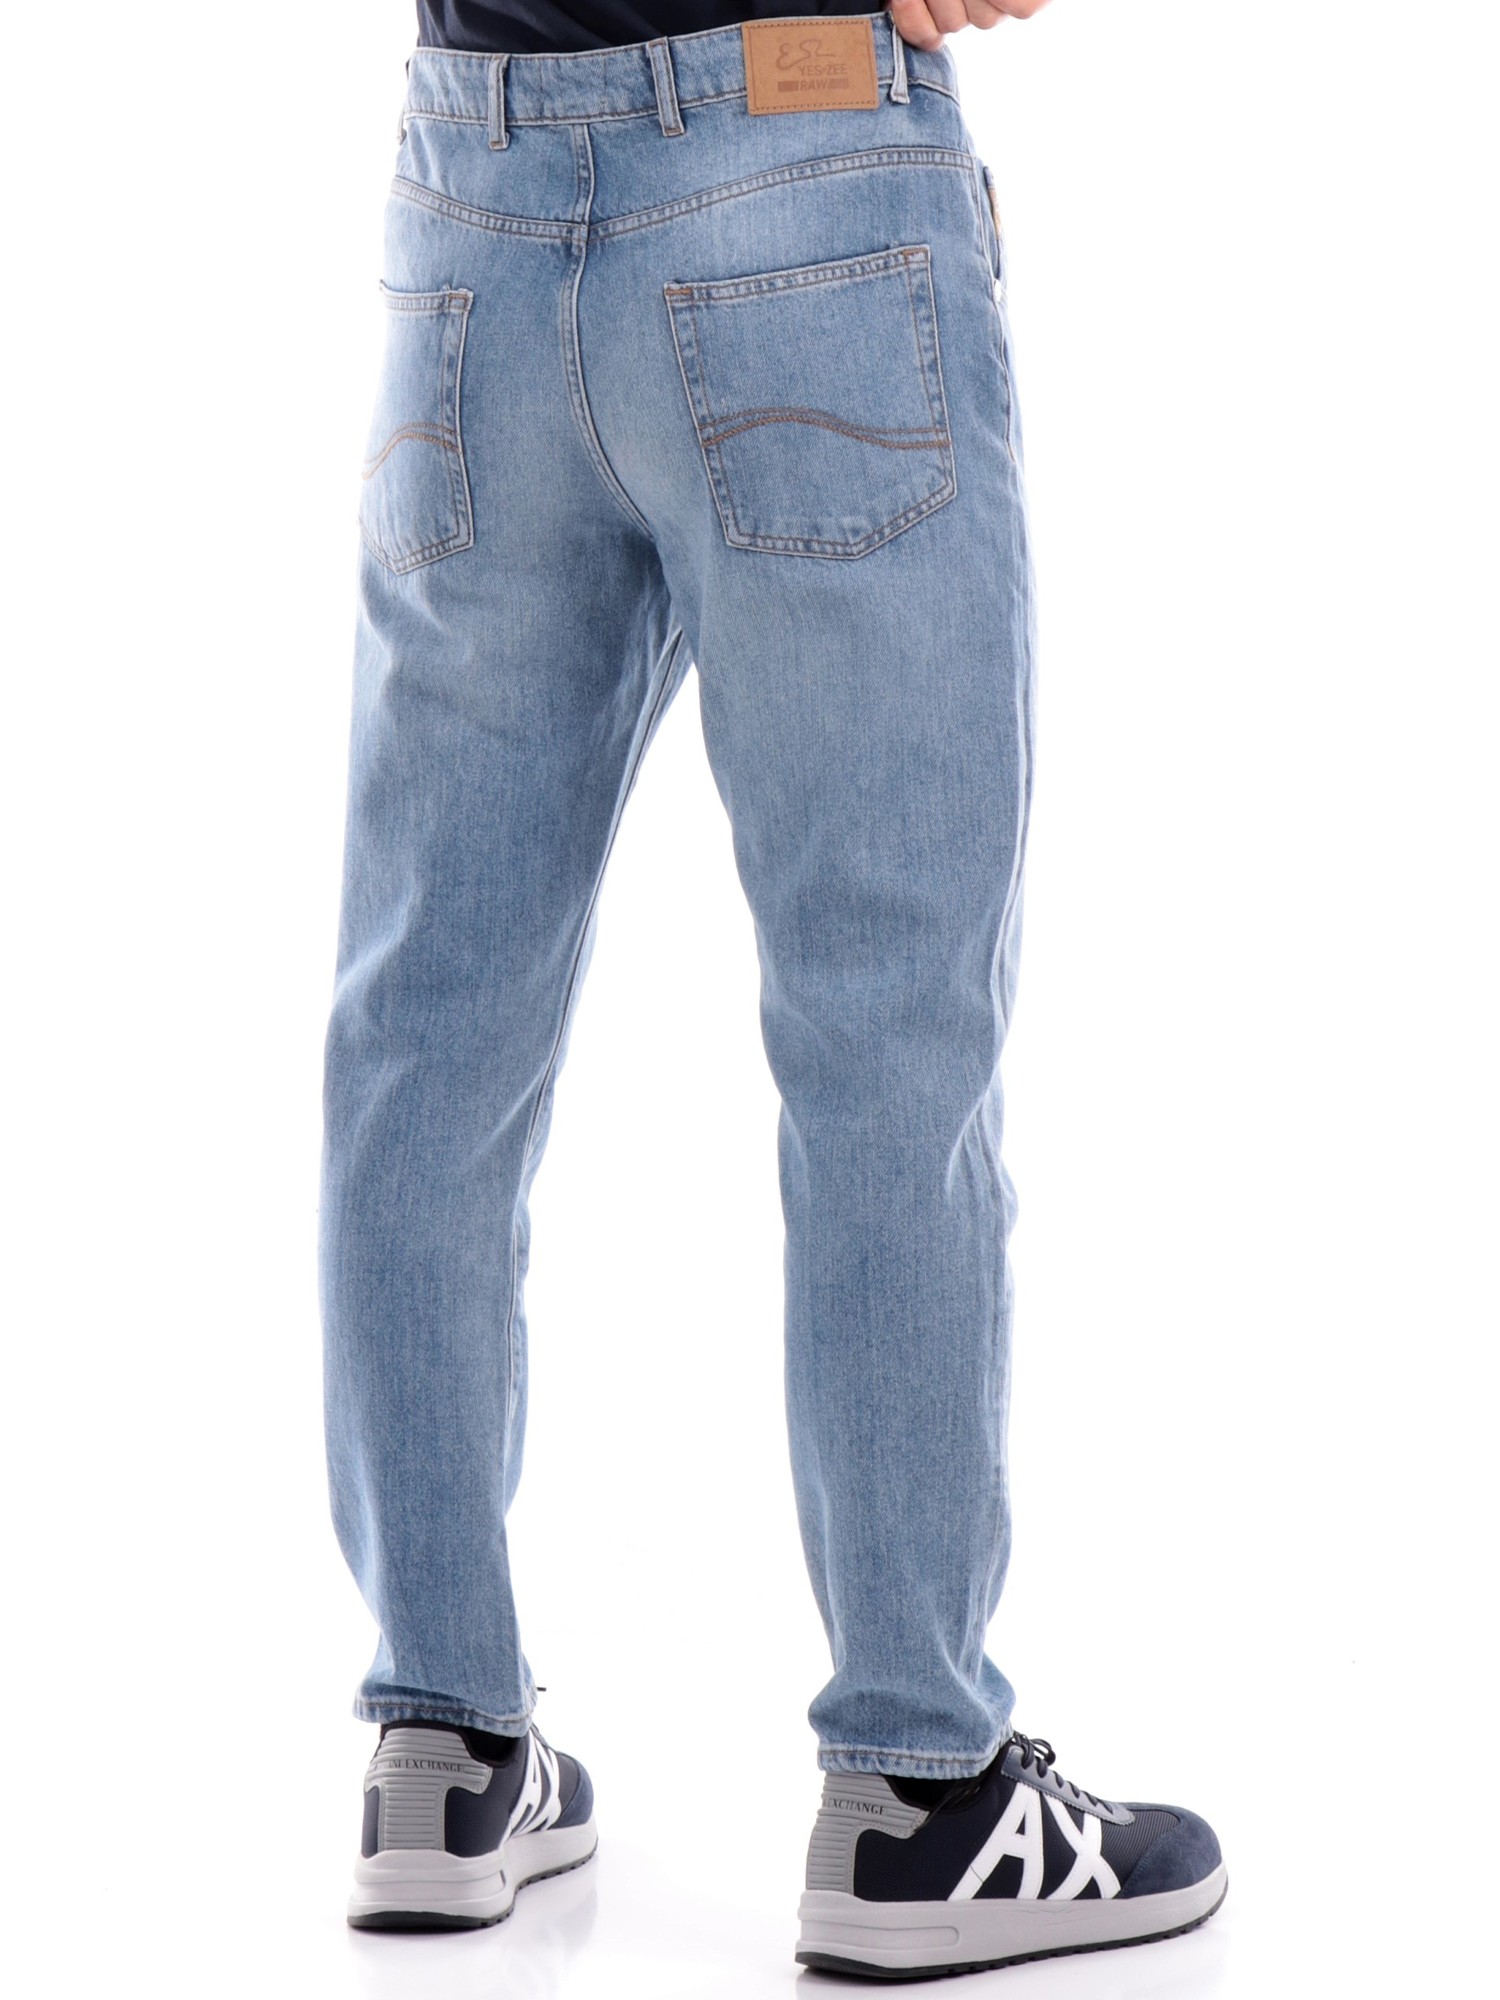 Pantaloni jeans Yes Zee da uomo 5 Tasche P613W526 | Sir126Roma